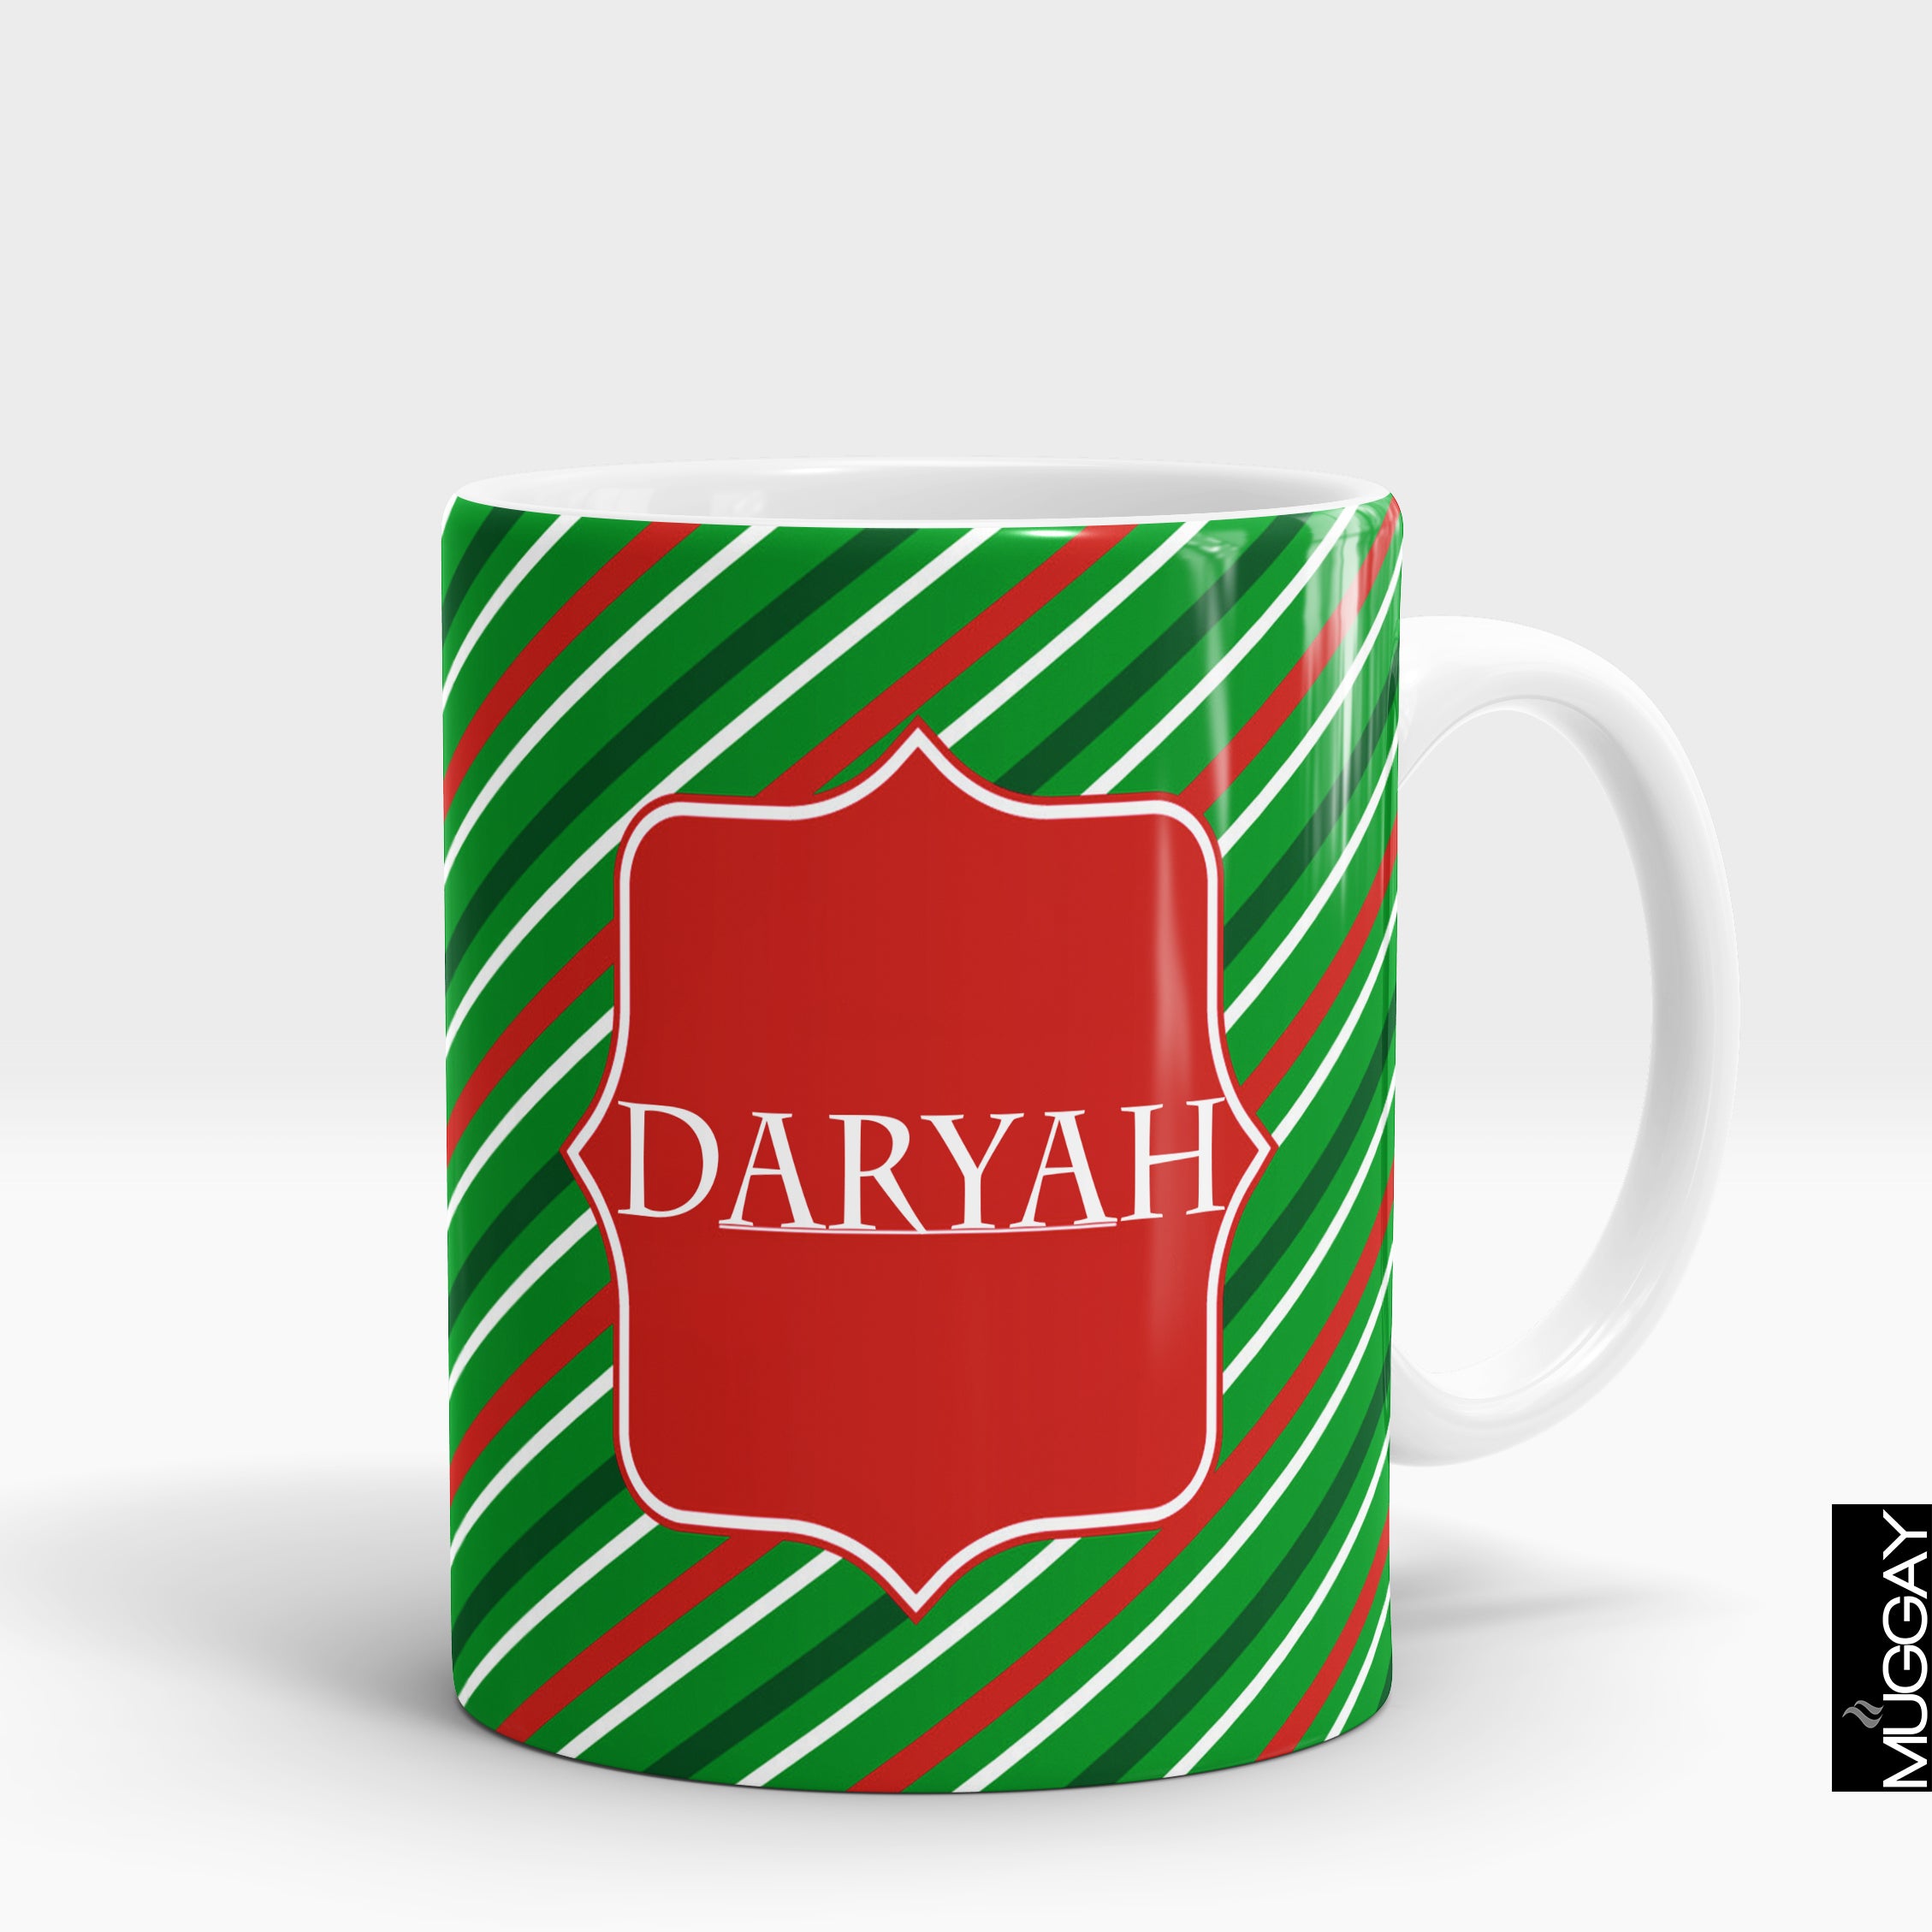 Daryah Mug - Muggay.com - Mugs - Printing shop - truck Art mugs - Mug printing - Customized printing - Digital printing - Muggay 